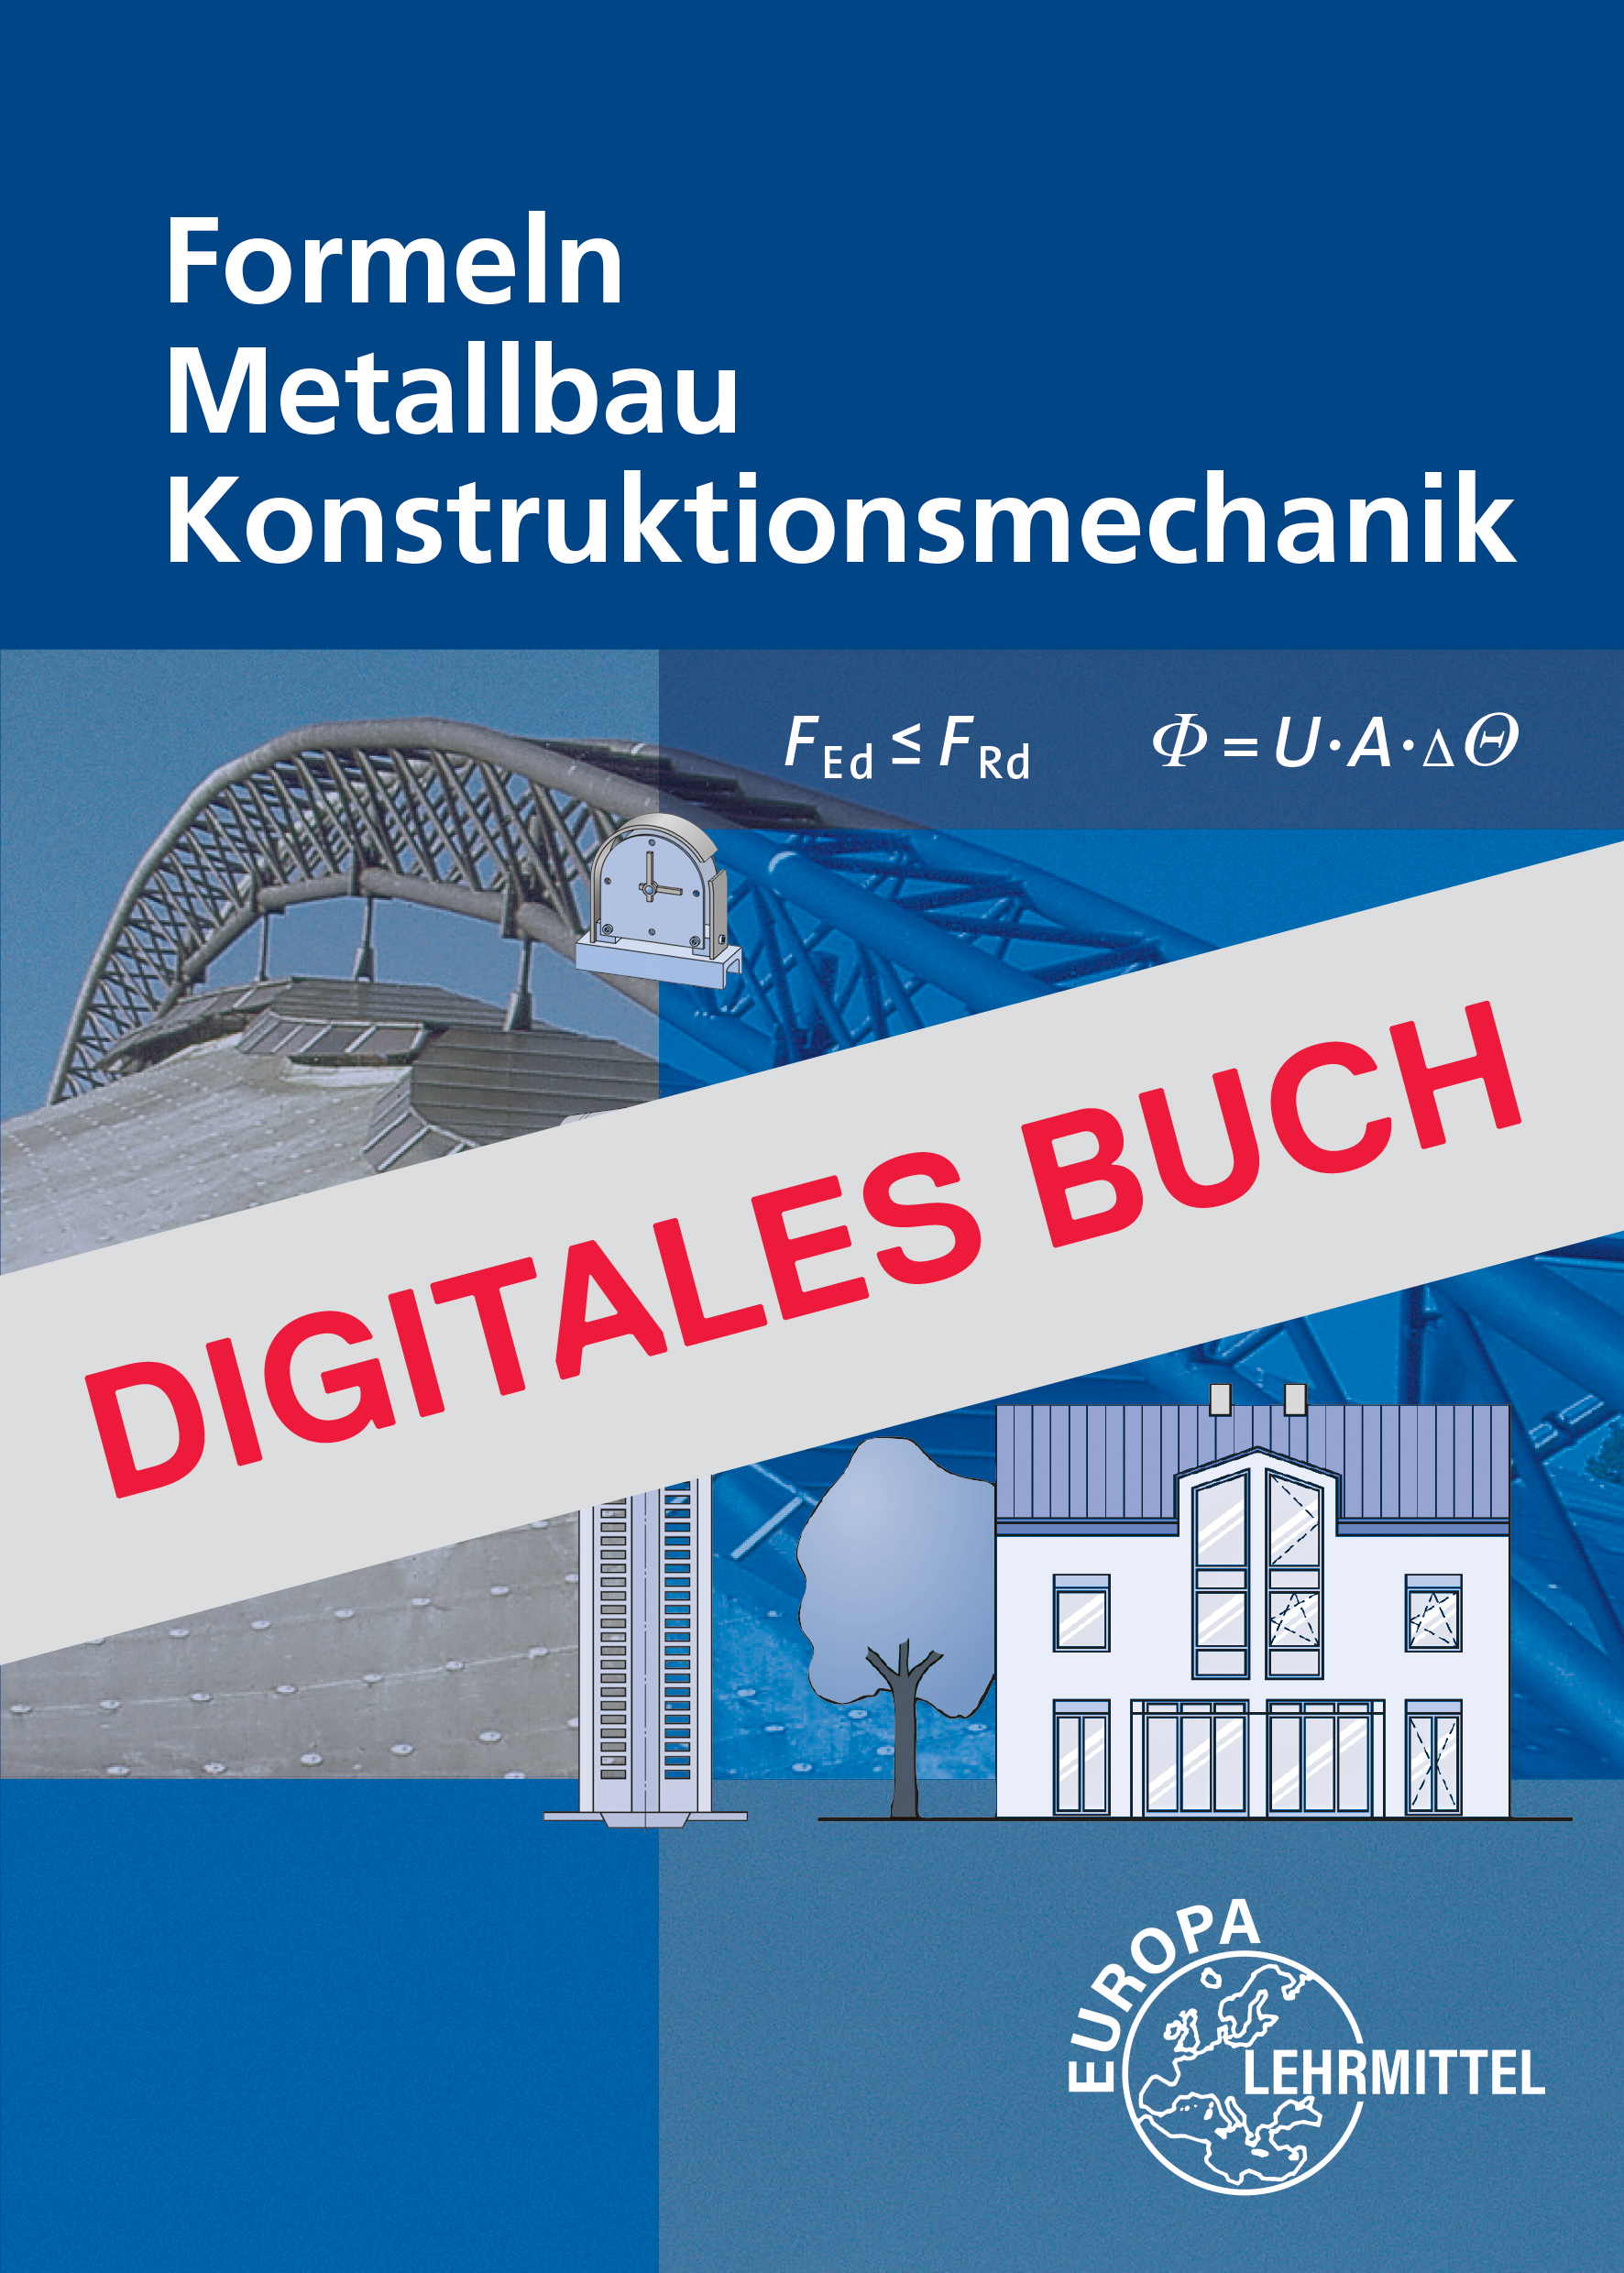 Formeln Metallbau Konstruktionsmechanik - Digitales Buch